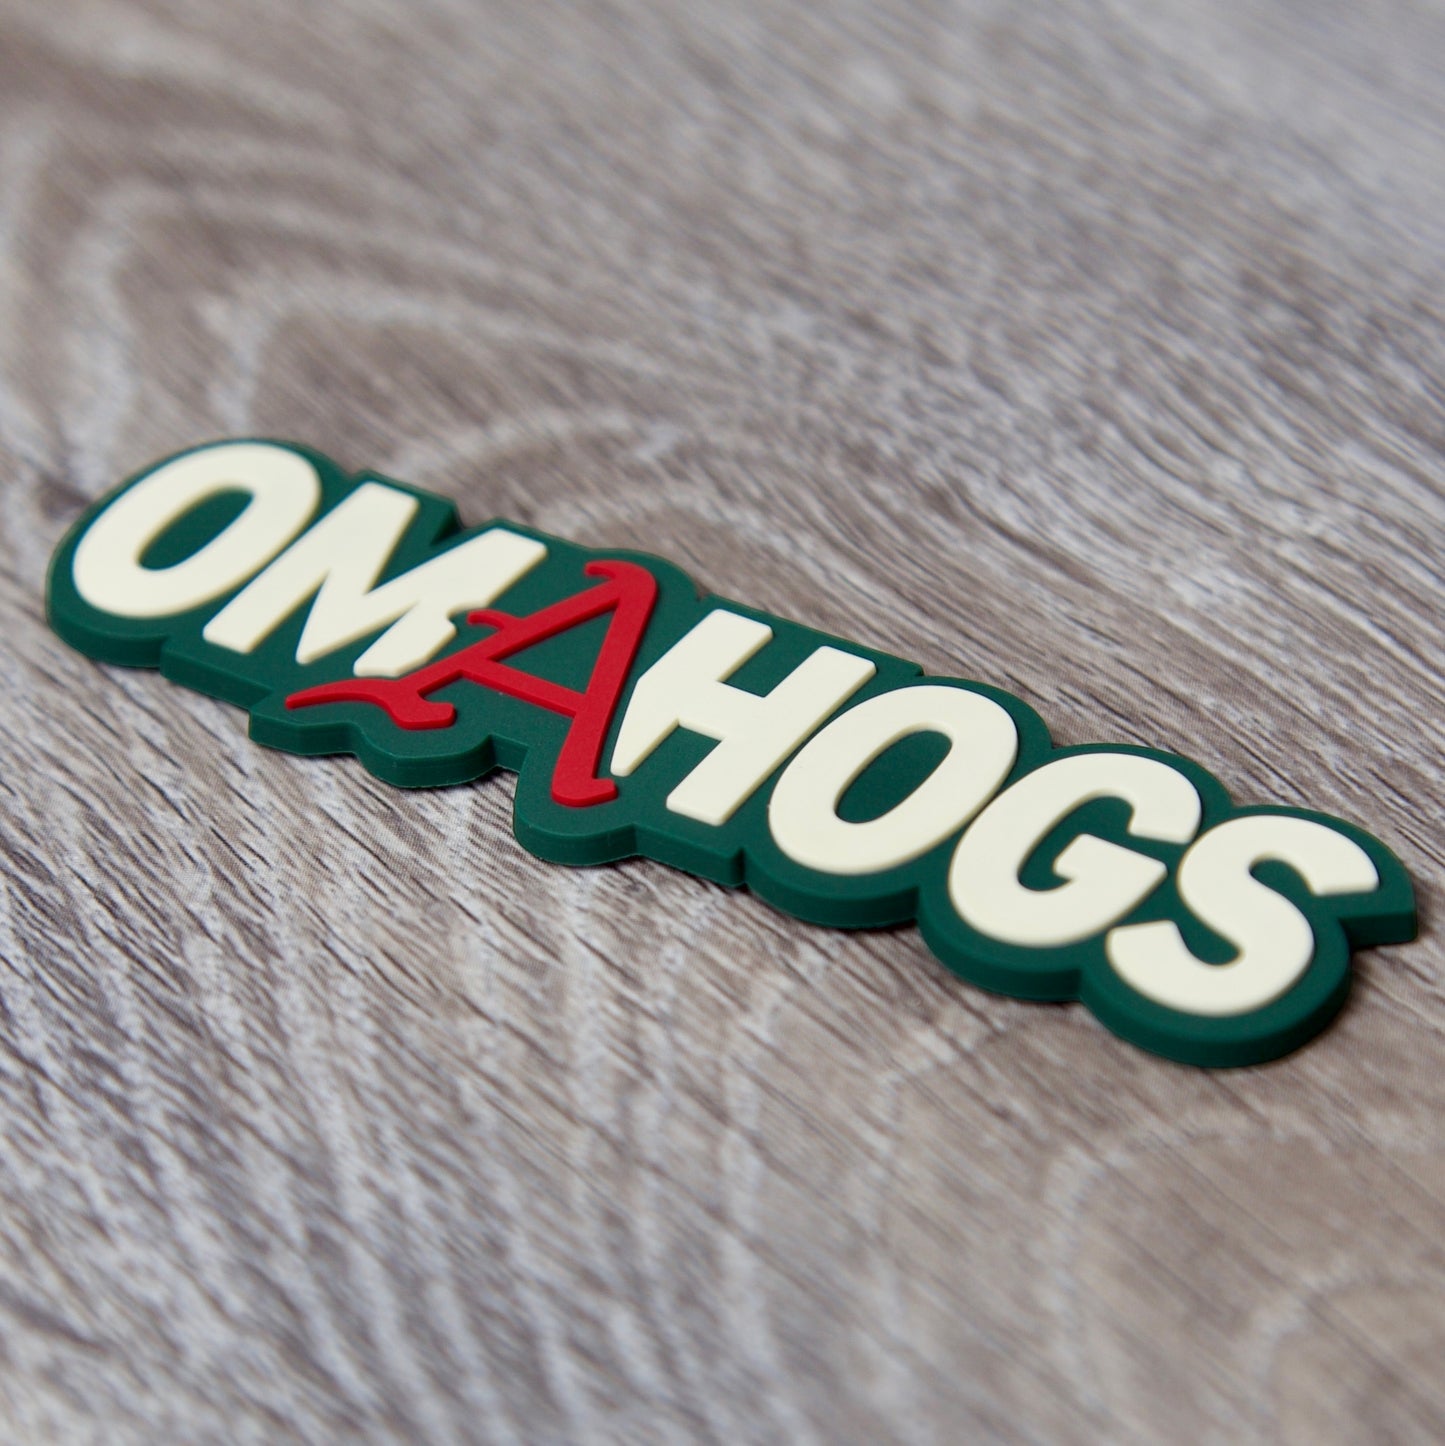 Arkansas Razorbacks OMAHOGS 3D Snapback Trucker Hat- Black/ White/ Heather Grey